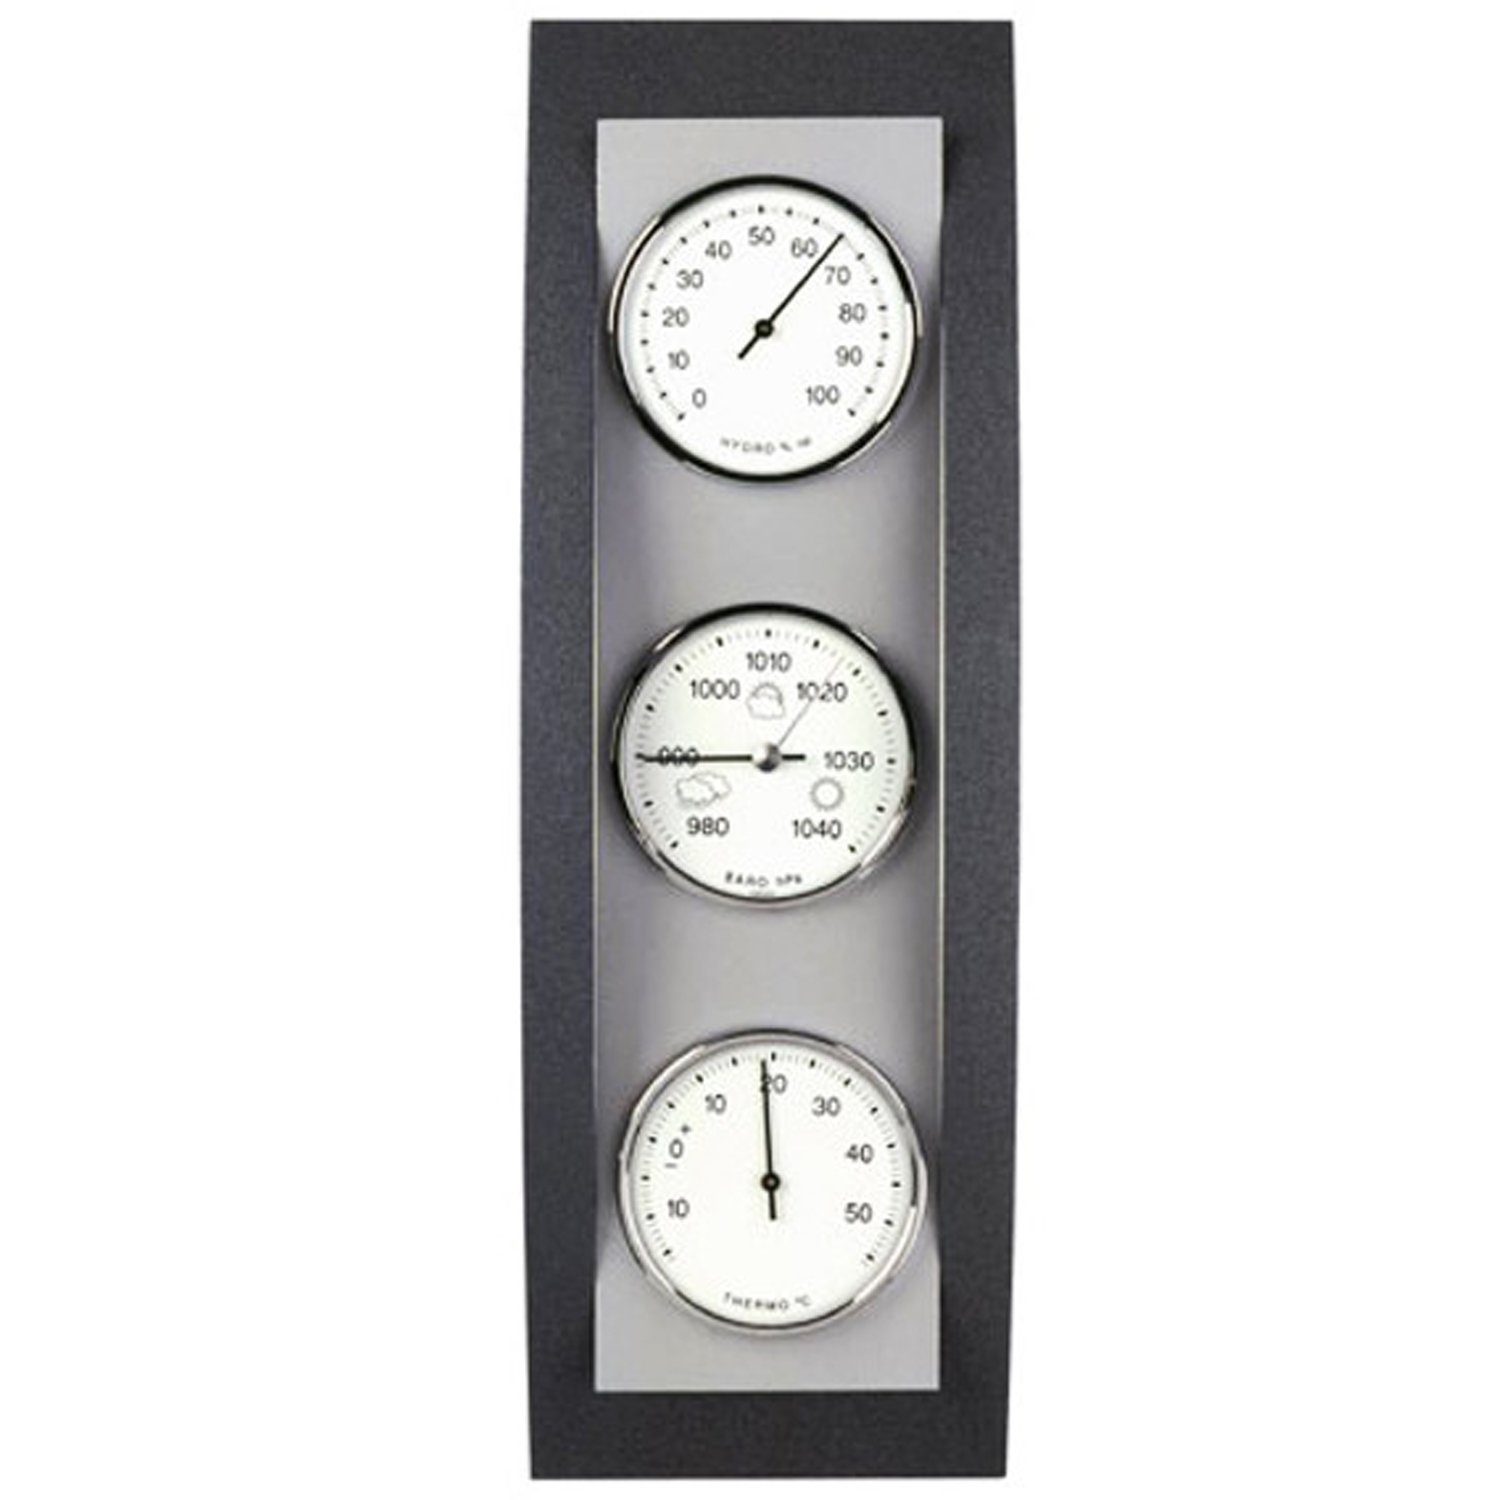 TFA Dostmann TFA 20.1082 mit analogem Thermometer Barometer Hygrometer Wetterstation Buche-anthrazit-Aluminium